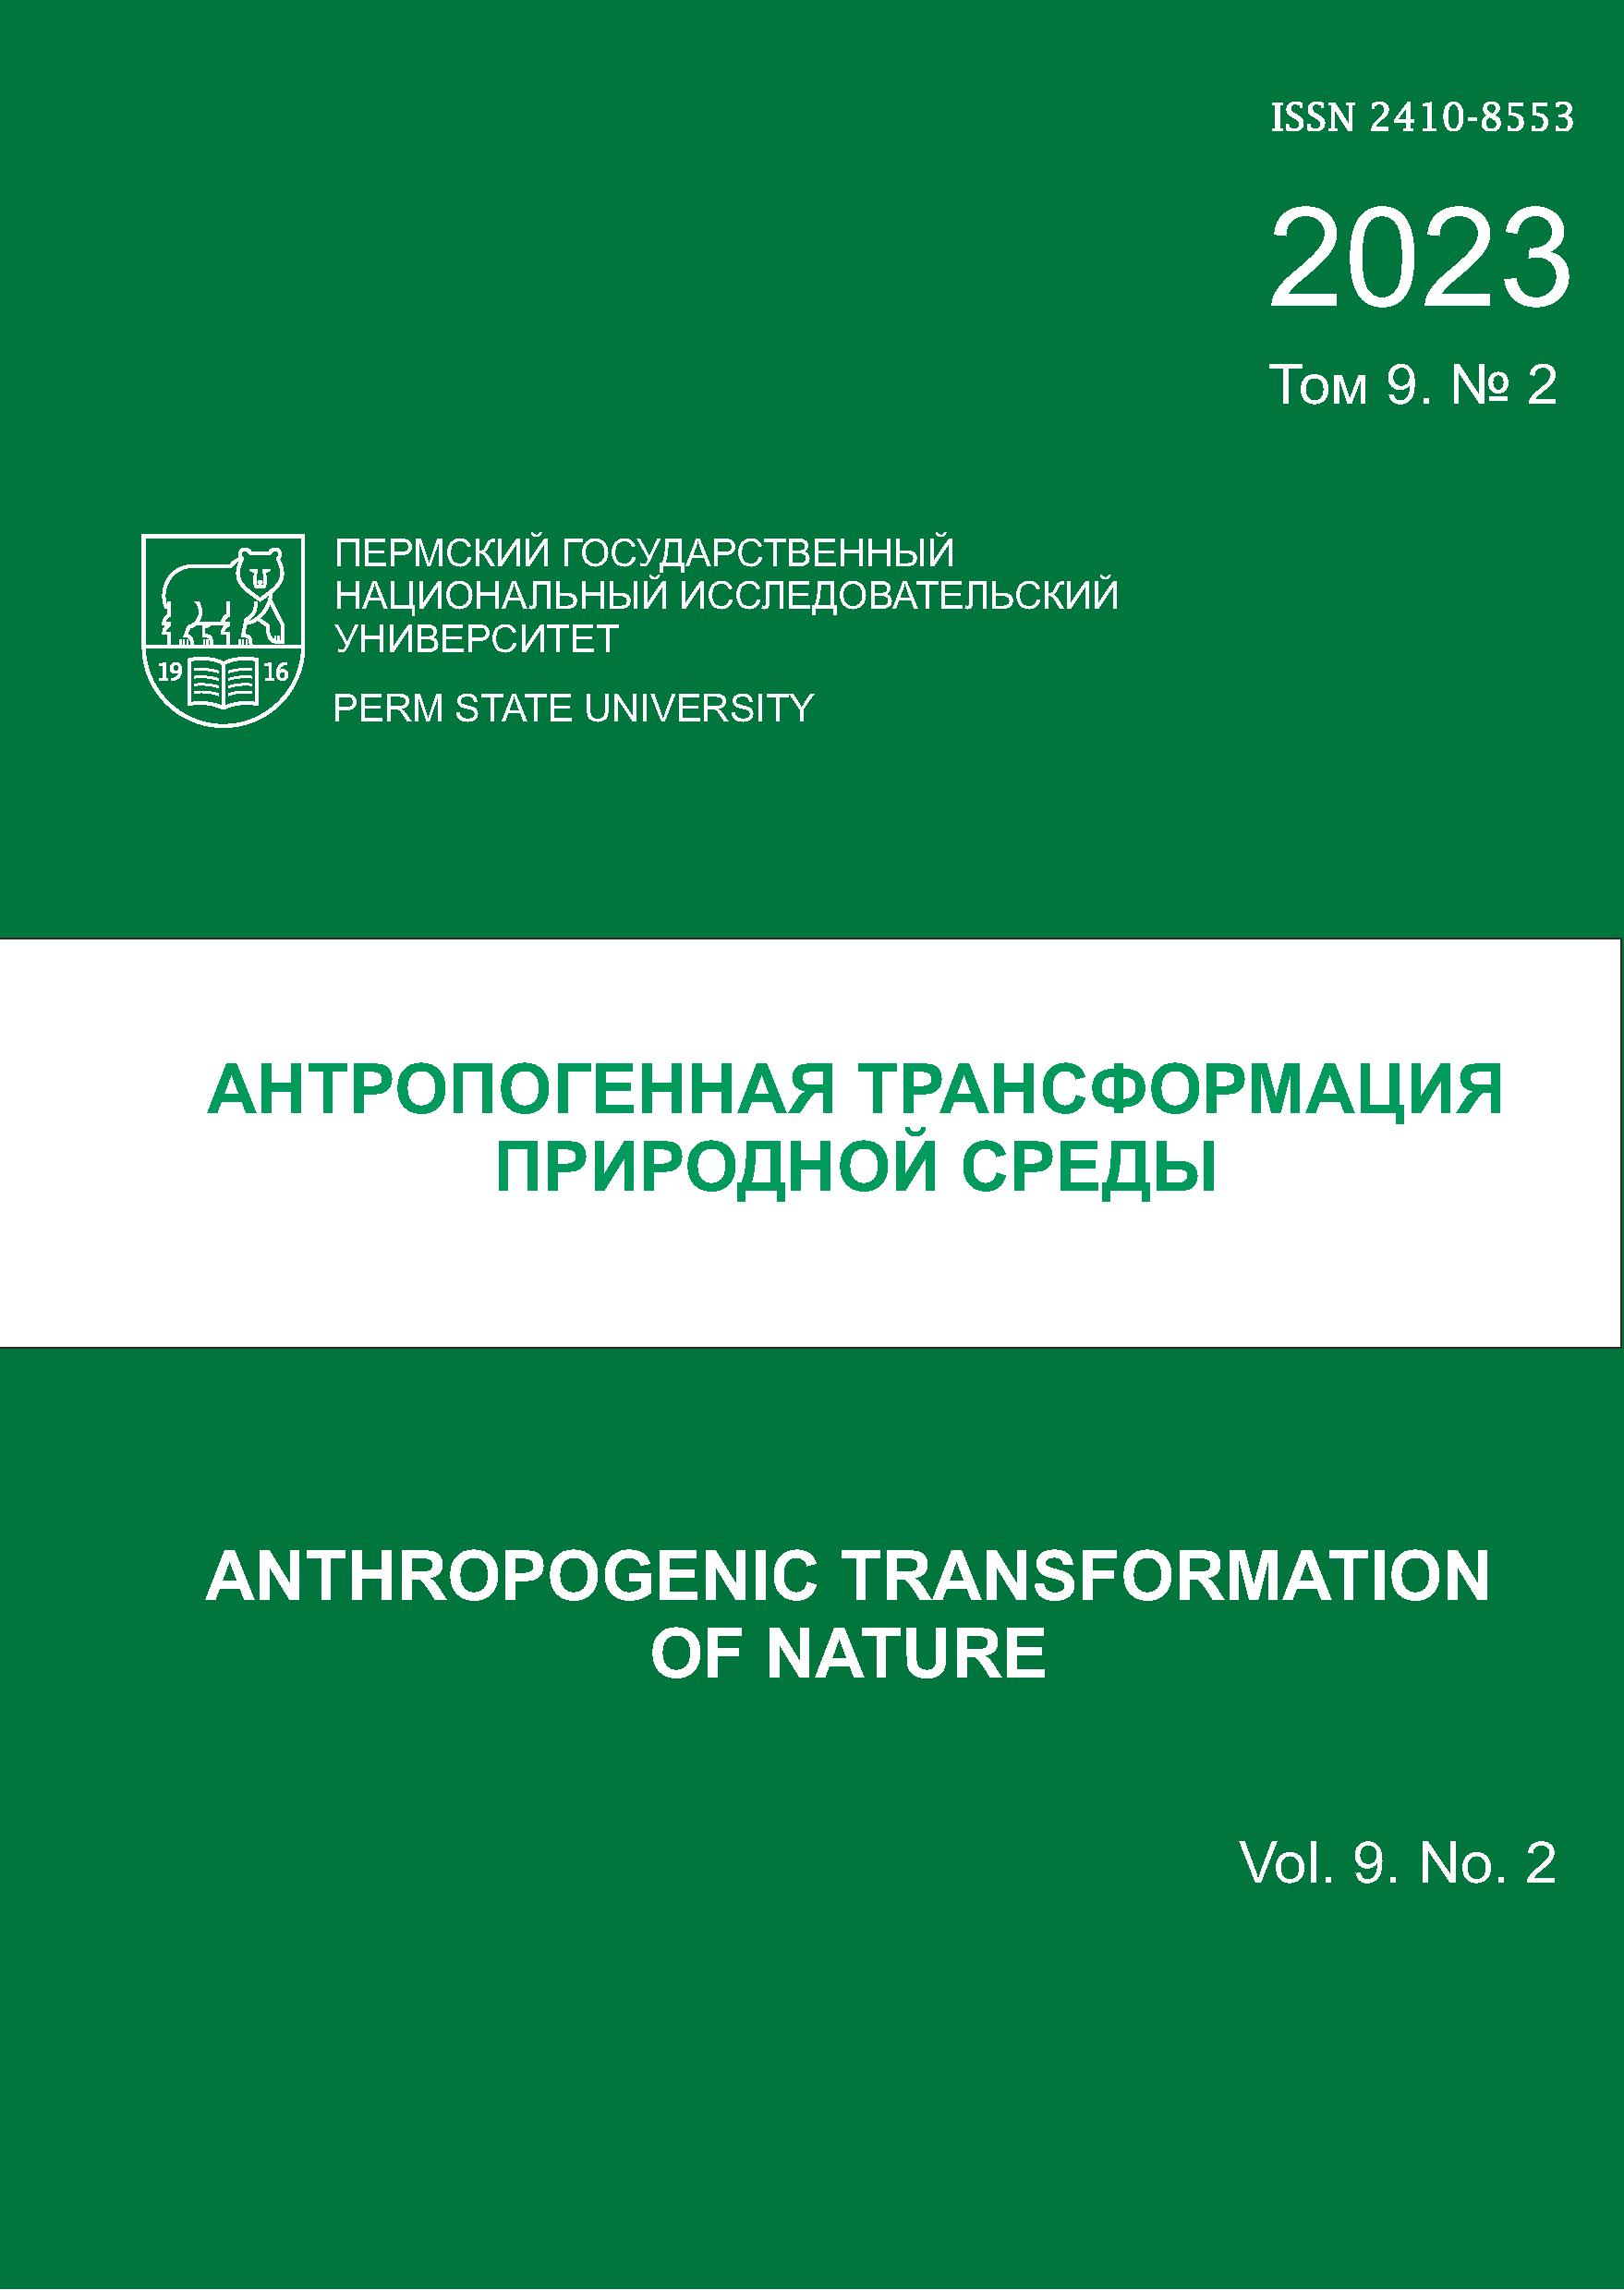 					View Vol. 9 No. 2 (2023): Anthropogenic Transformation of Nature
				